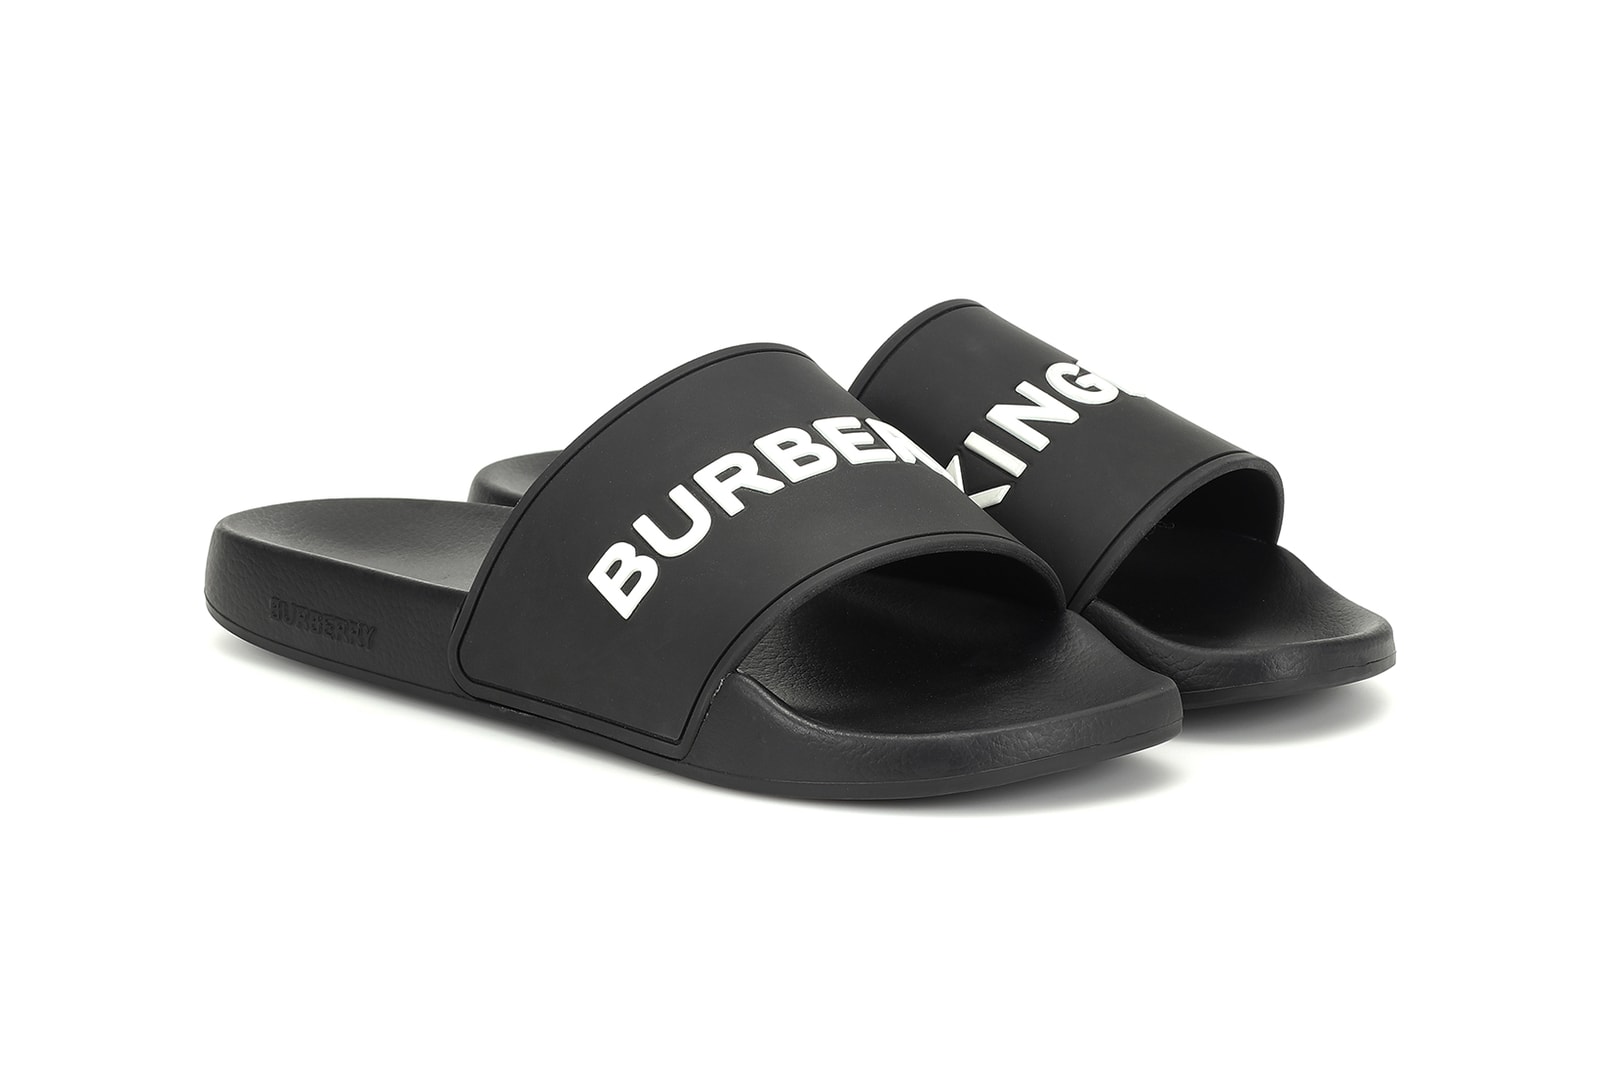 burberry mytheresa exclusive beach capsule collection swimwear beachwear fashion clothes summer